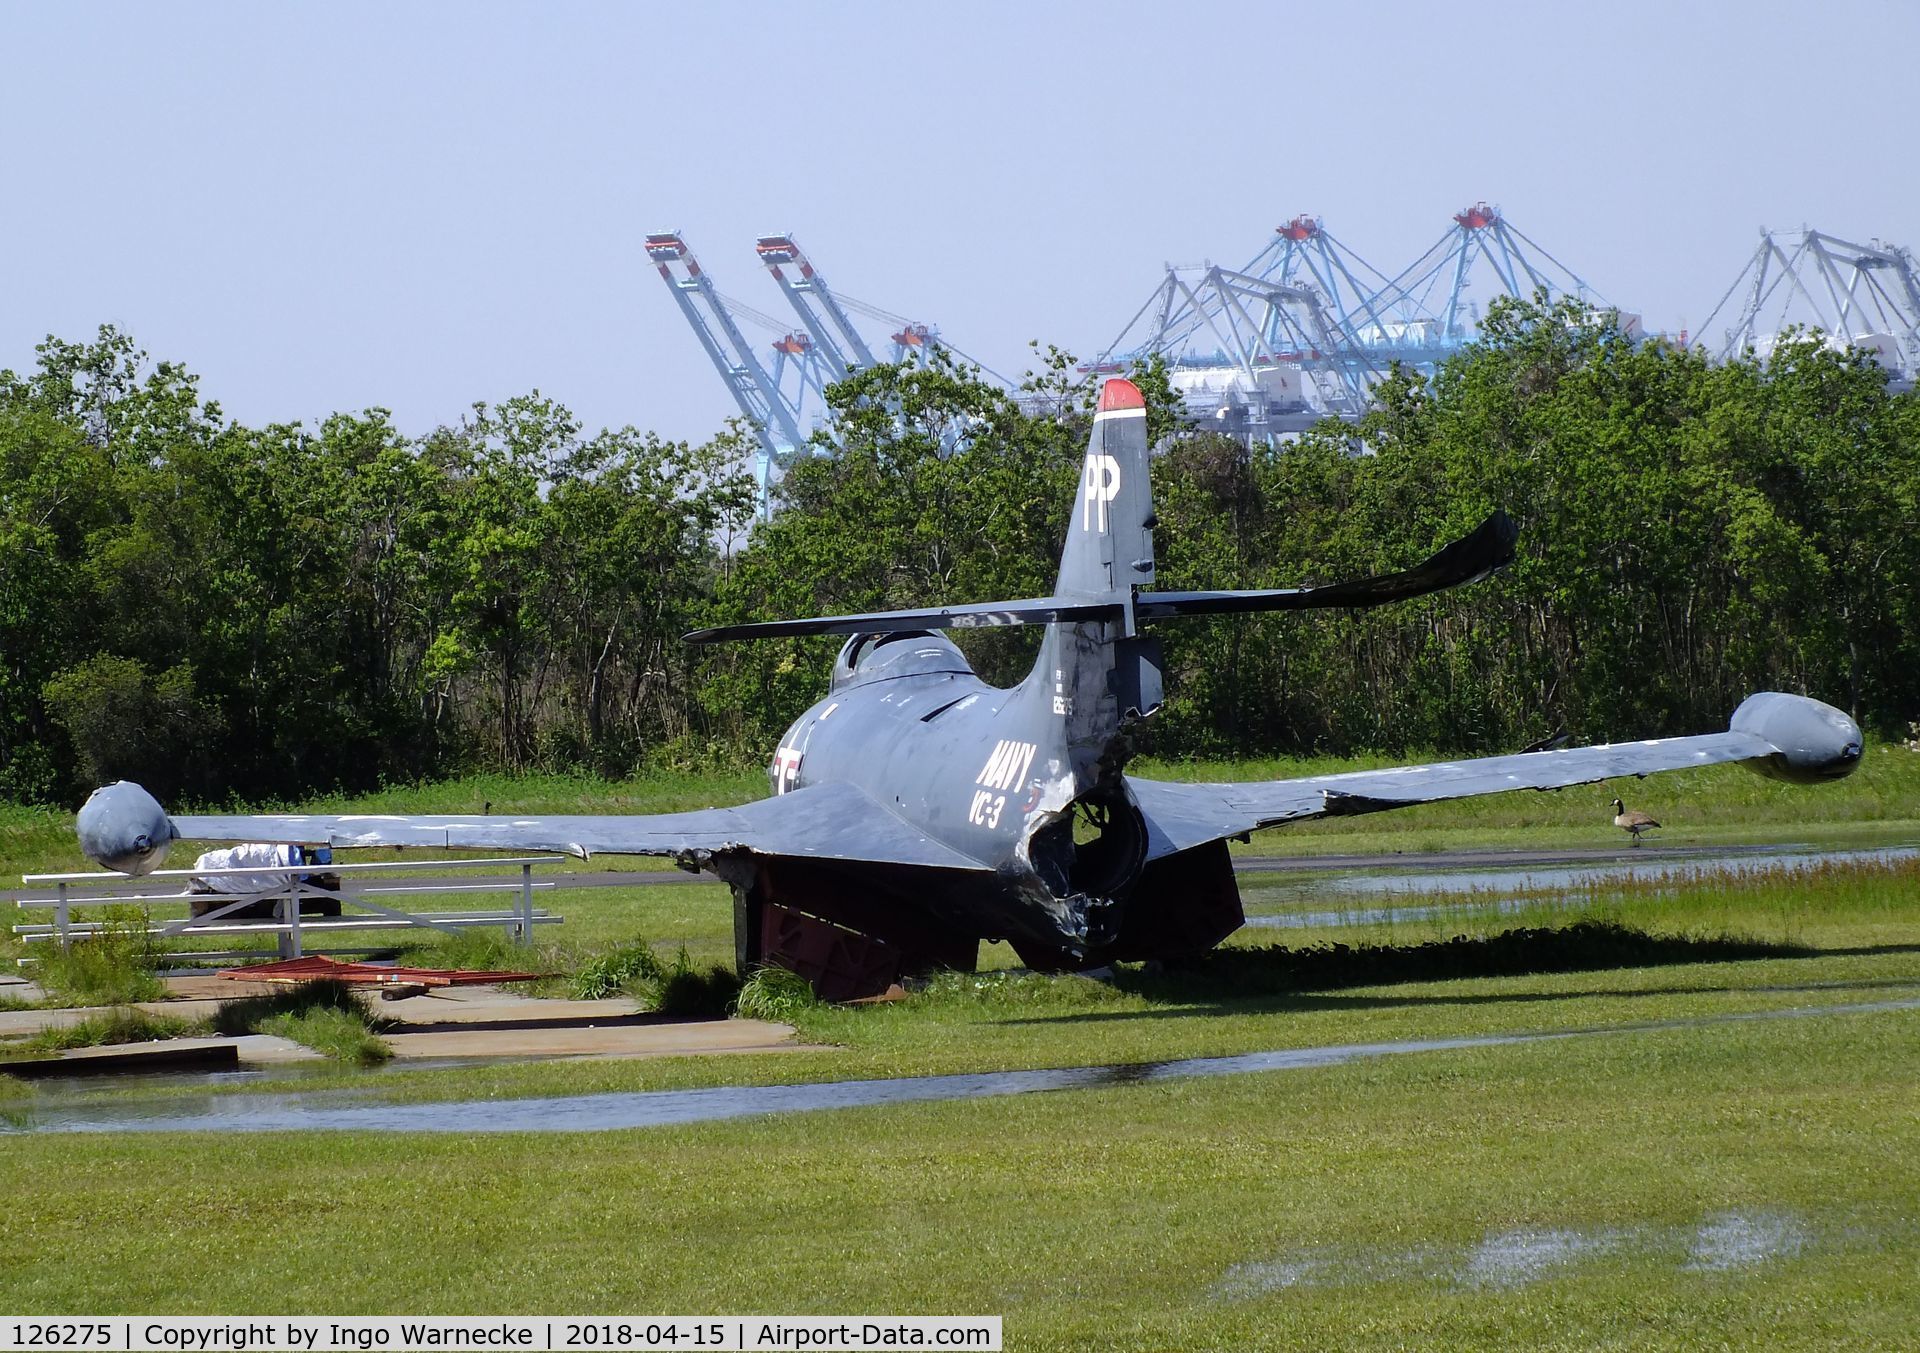 126275, 1950 Grumman F9F-5P Panther C/N Not found 126275, Grumman F9F-5P Panther, awaiting repair and restoration at the USS Alabama Battleship Memorial Park, Mobile AL